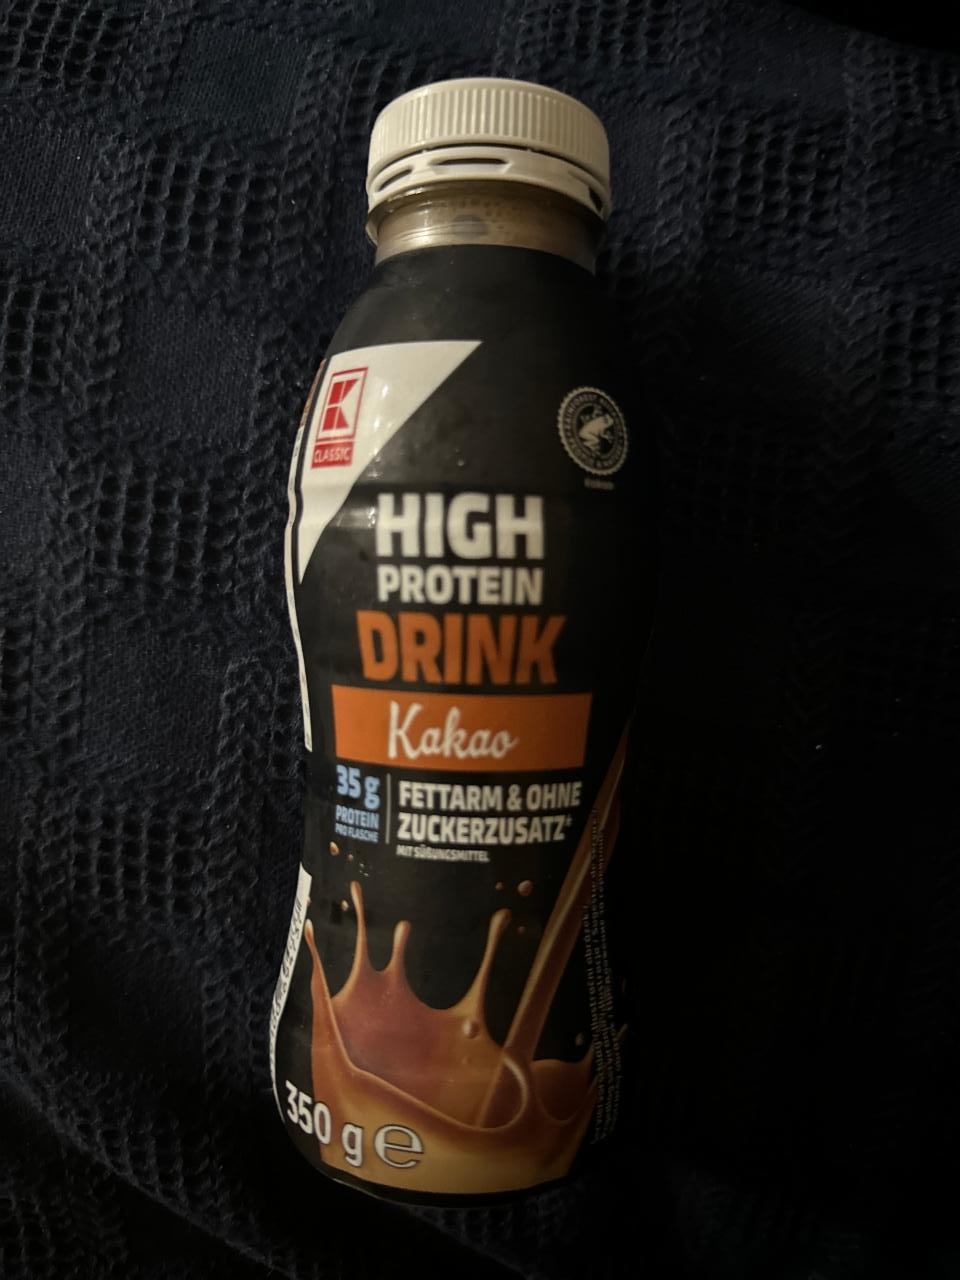 Фото - Протеиновый напиток какао High protein drink kakao K-Classic